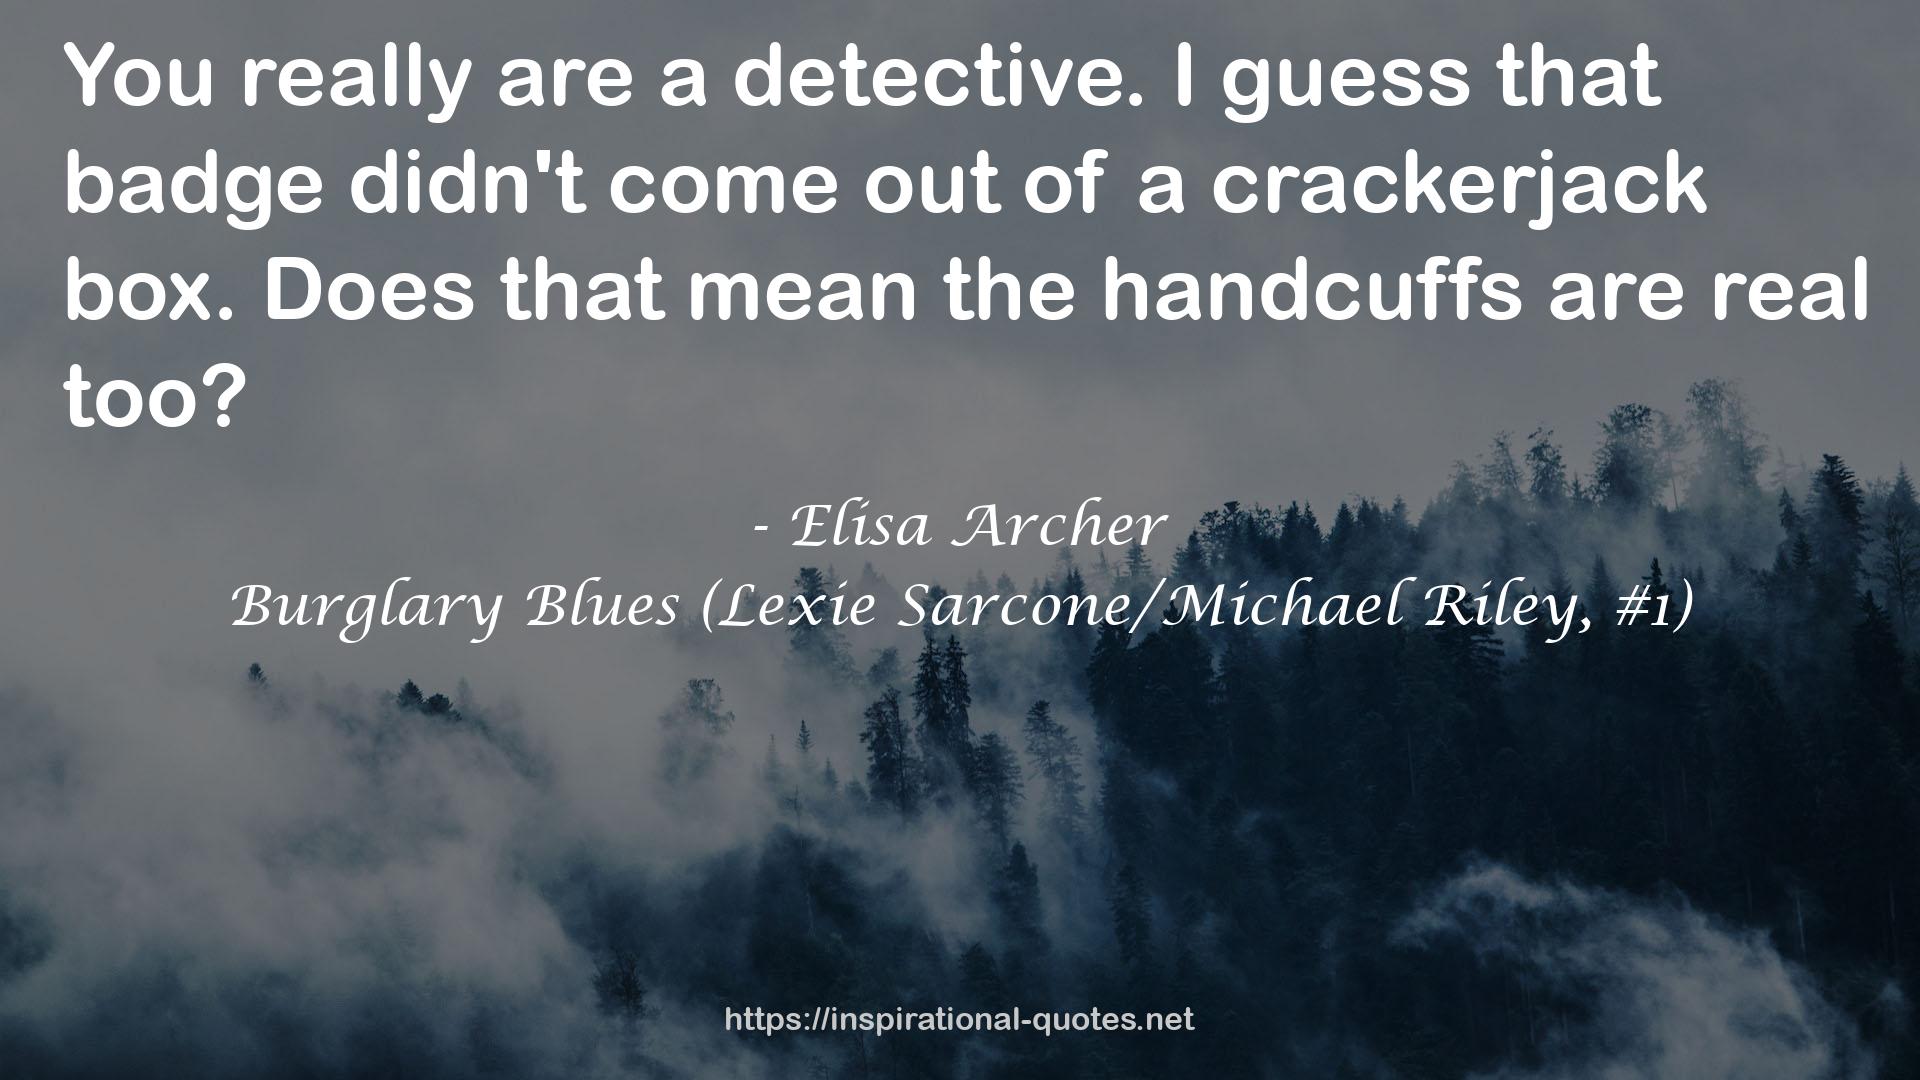 Burglary Blues (Lexie Sarcone/Michael Riley, #1) QUOTES